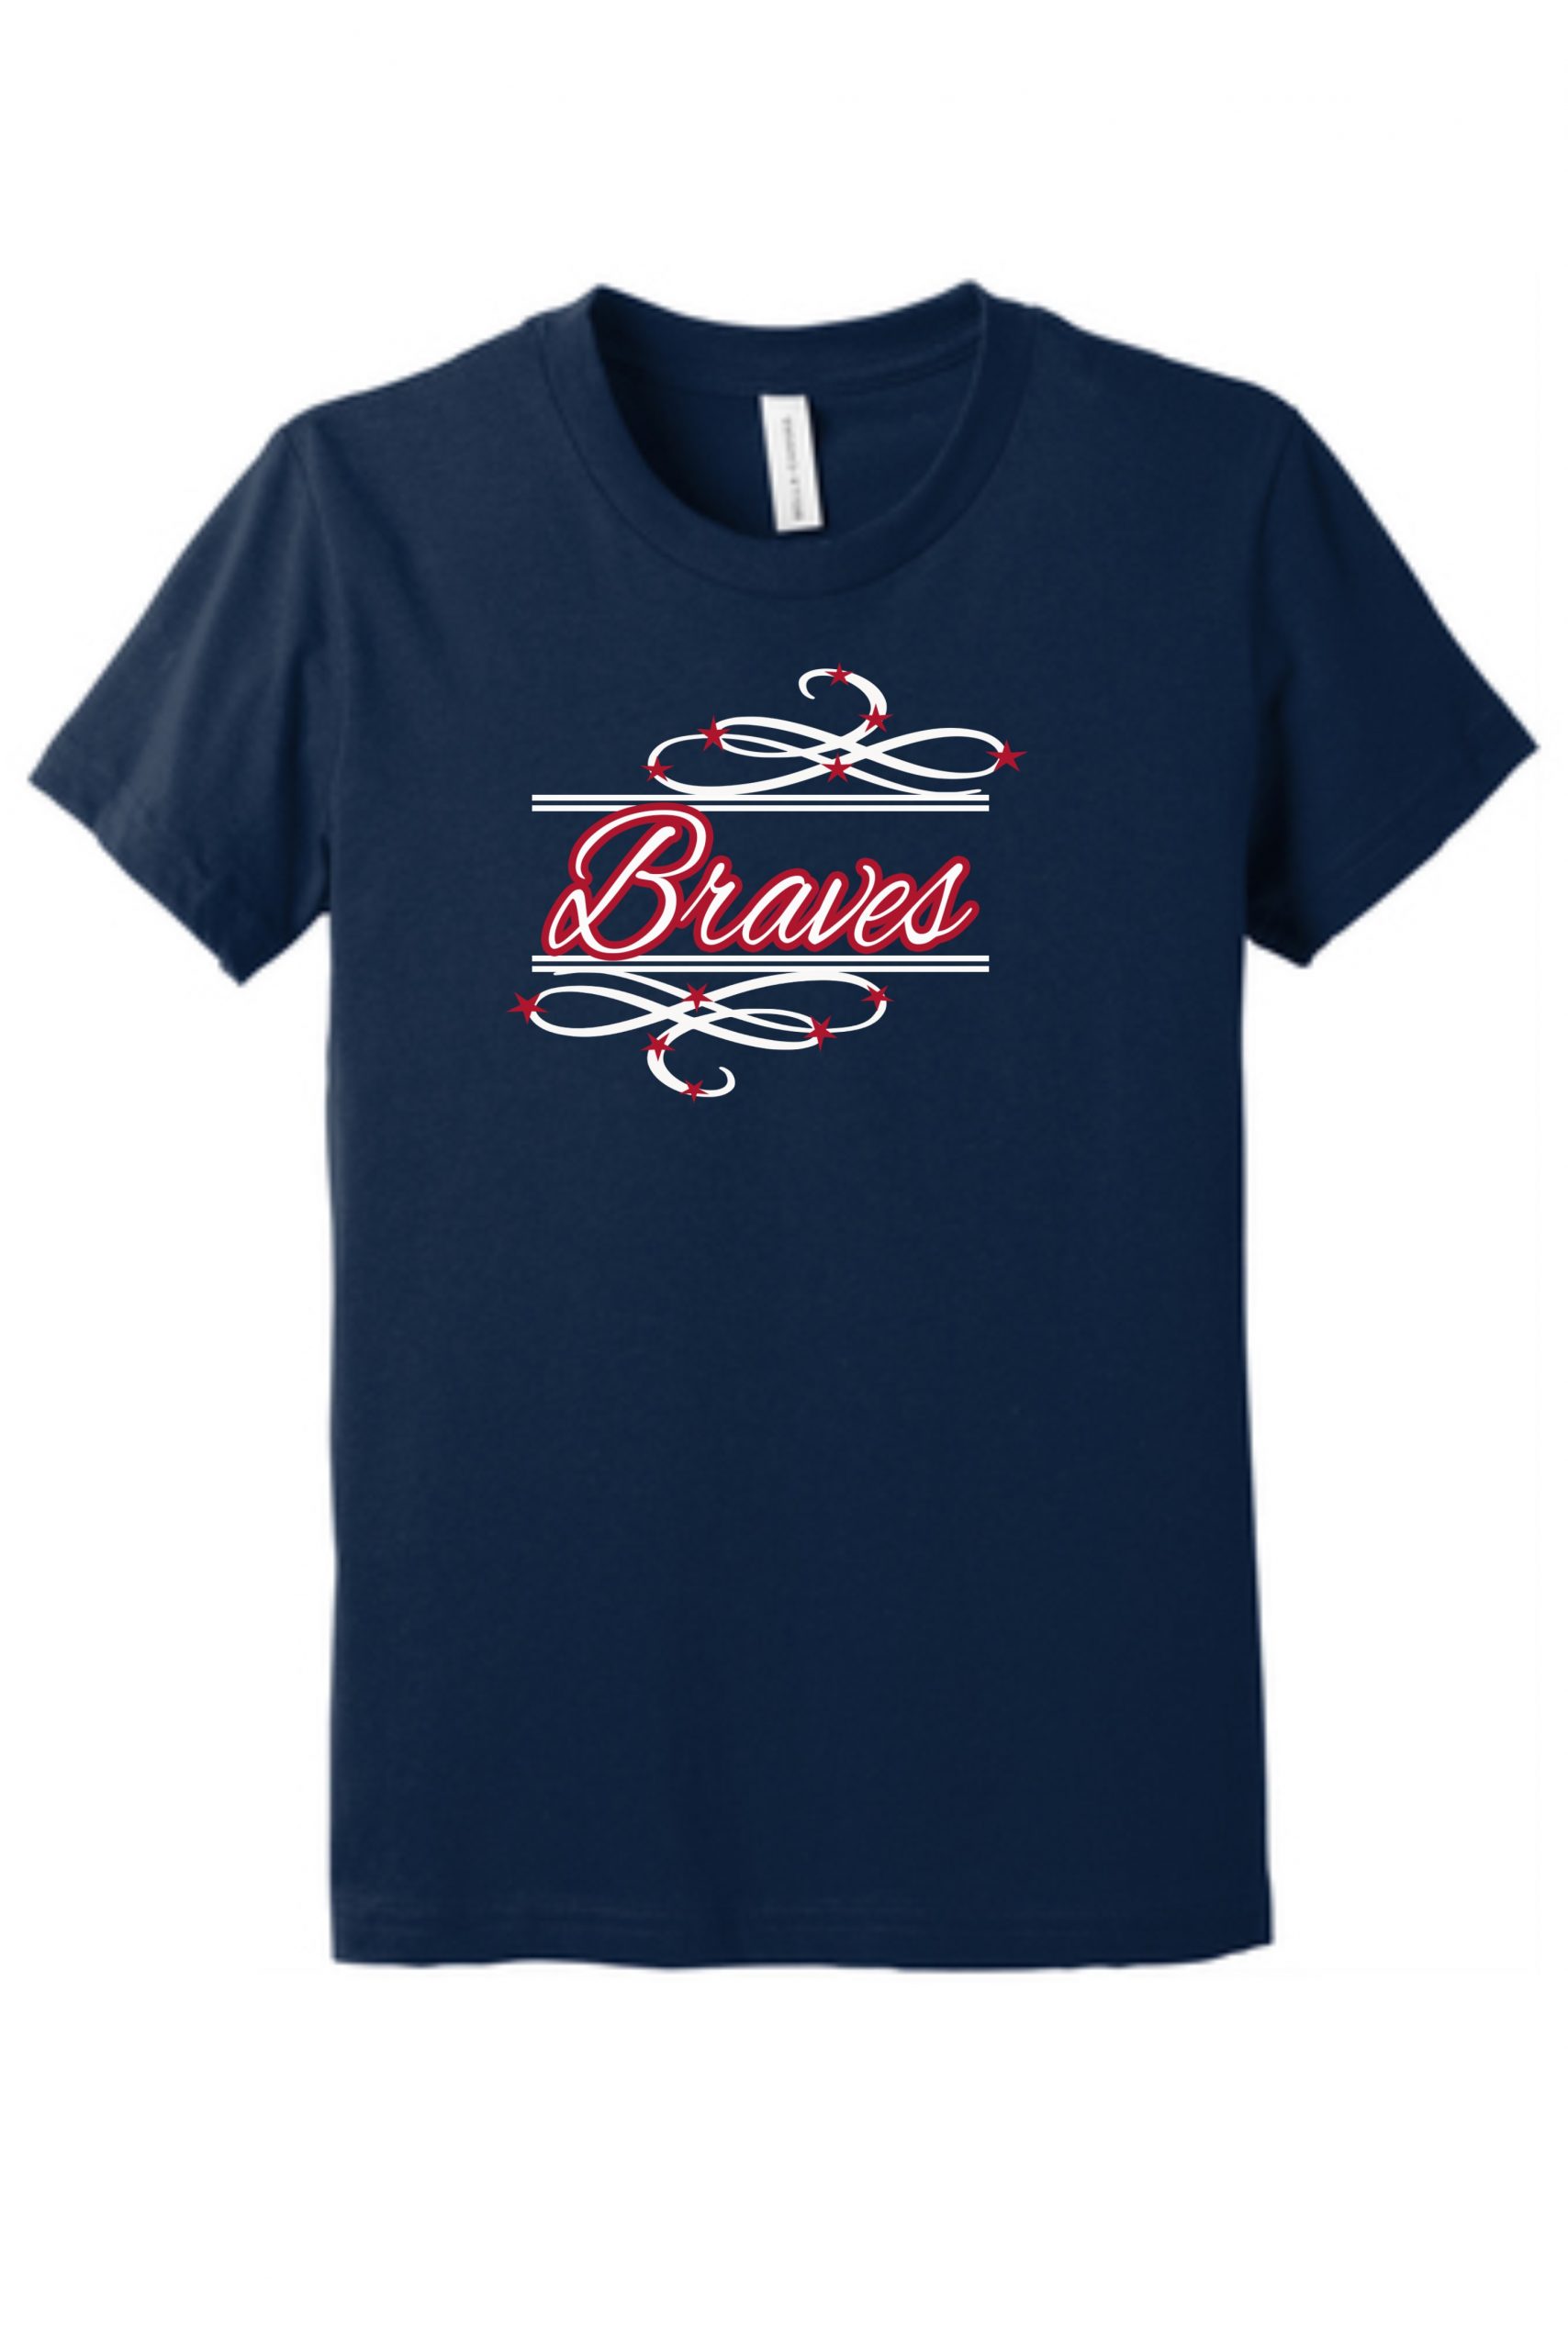 Braves T-shirts